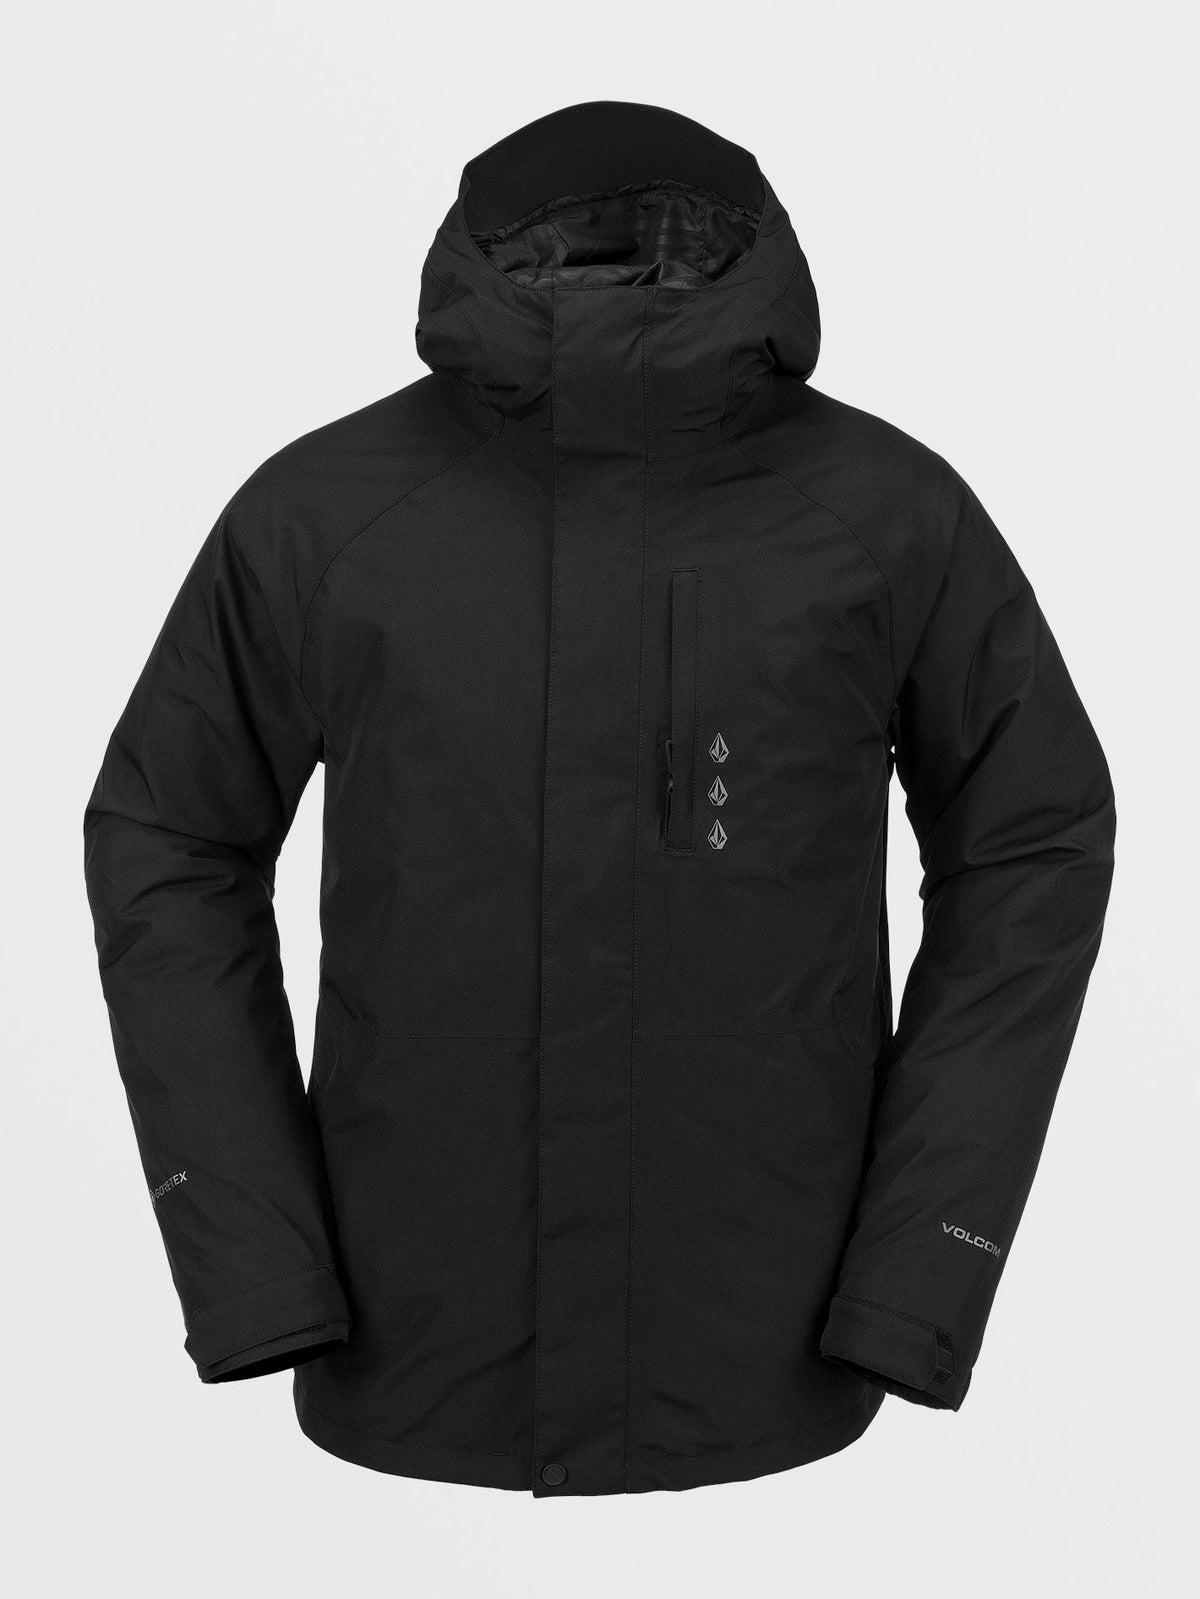 Volcom Dua Insulated Gore Men's Snowboarding & Ski Jacket Black